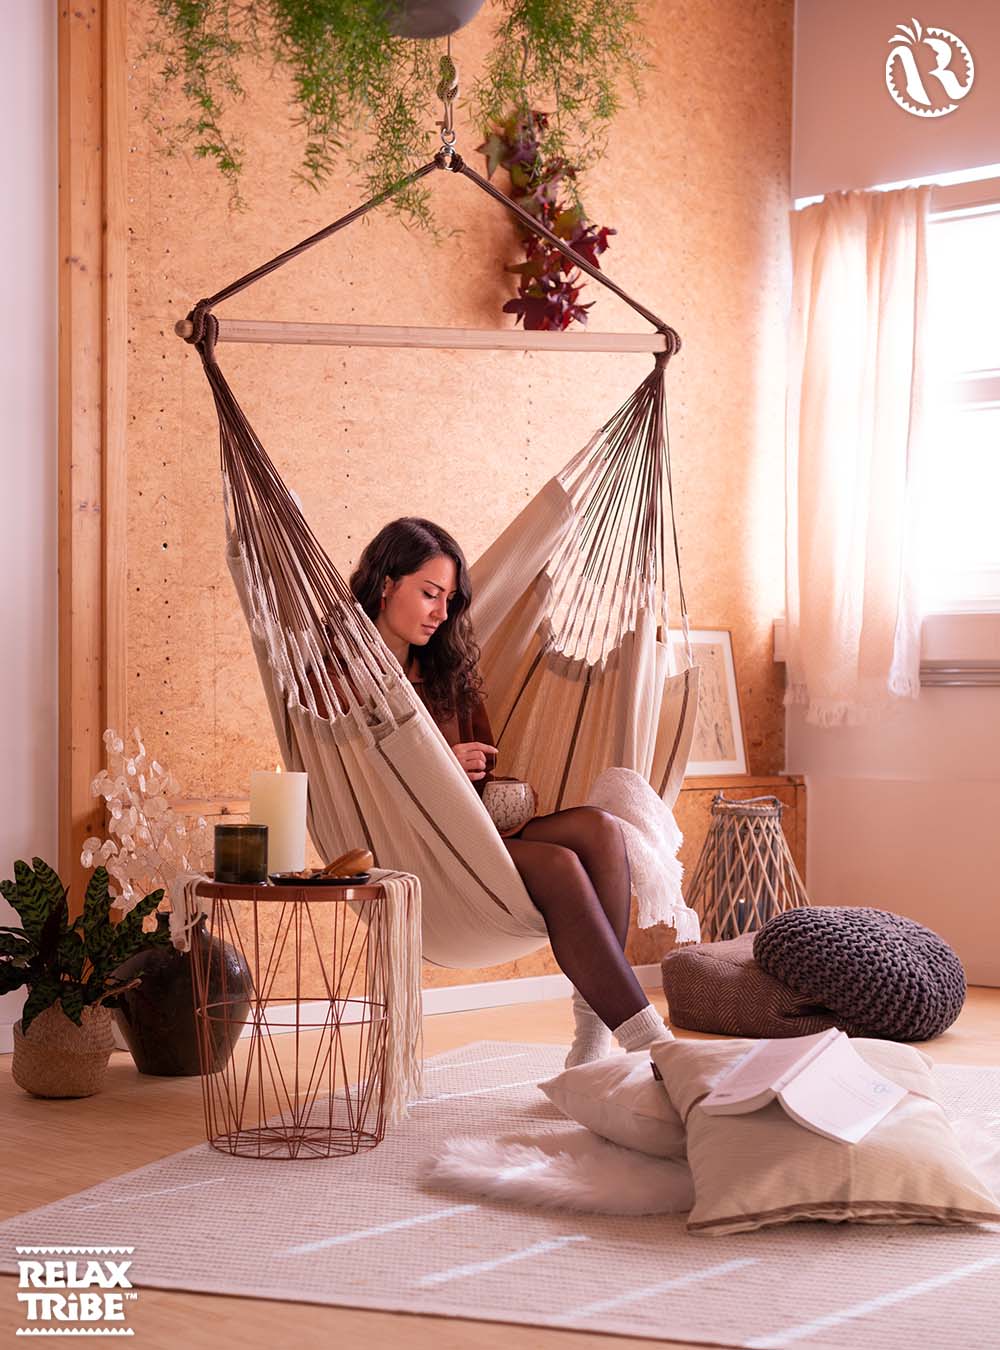 habana-nougat-double-kingsize-xl-eco-lounger-hammock-chair-pure-organic-cotton-fsc-wood-handmade-white-ecru-brown-indoor